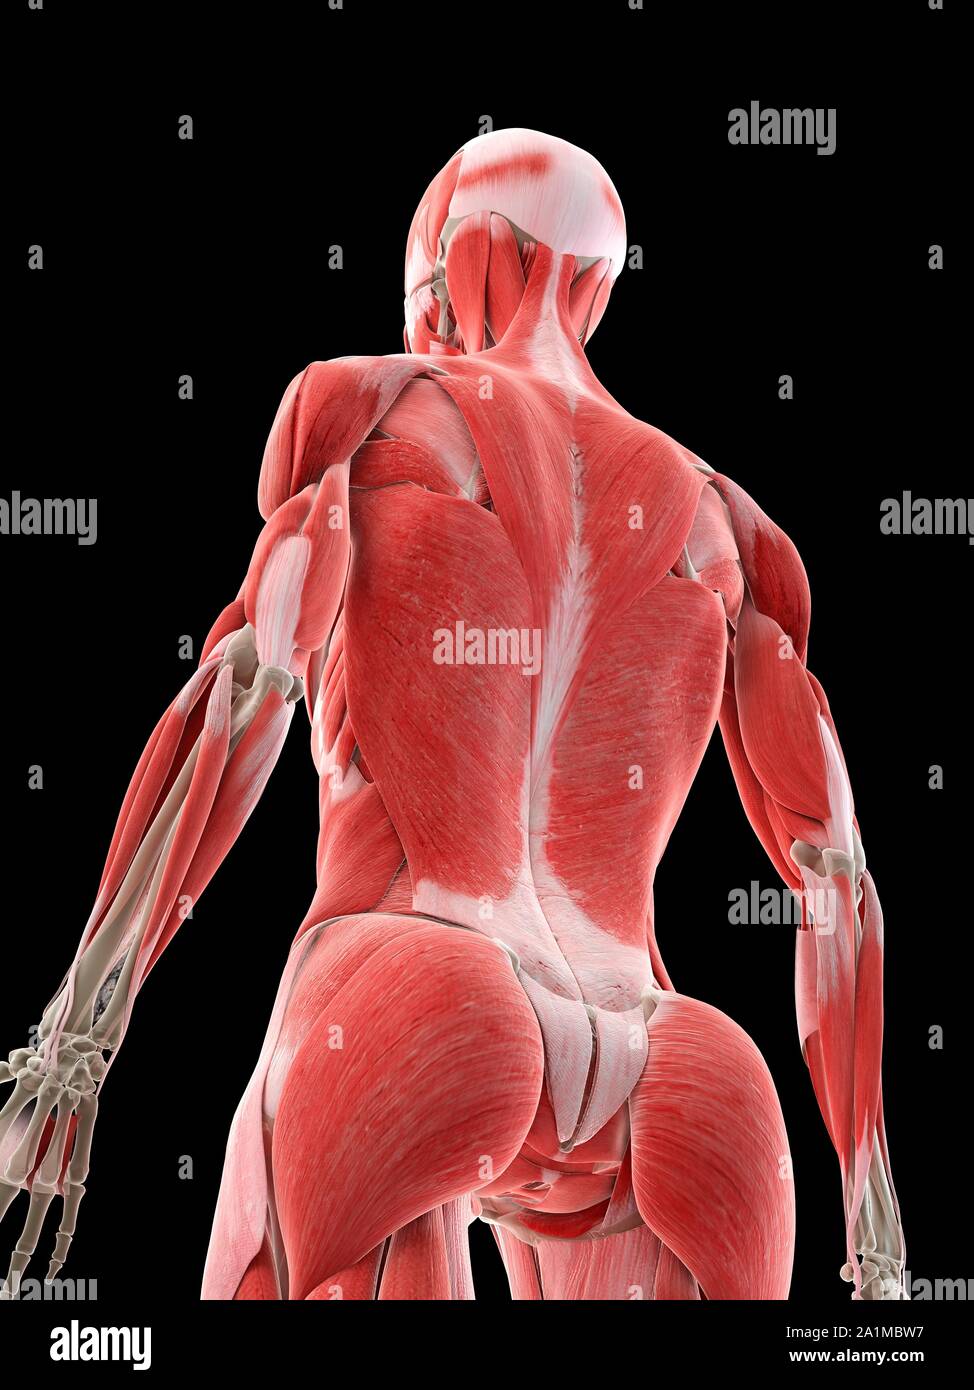 Female back muscles, computer illustration Stock Photo - Alamy